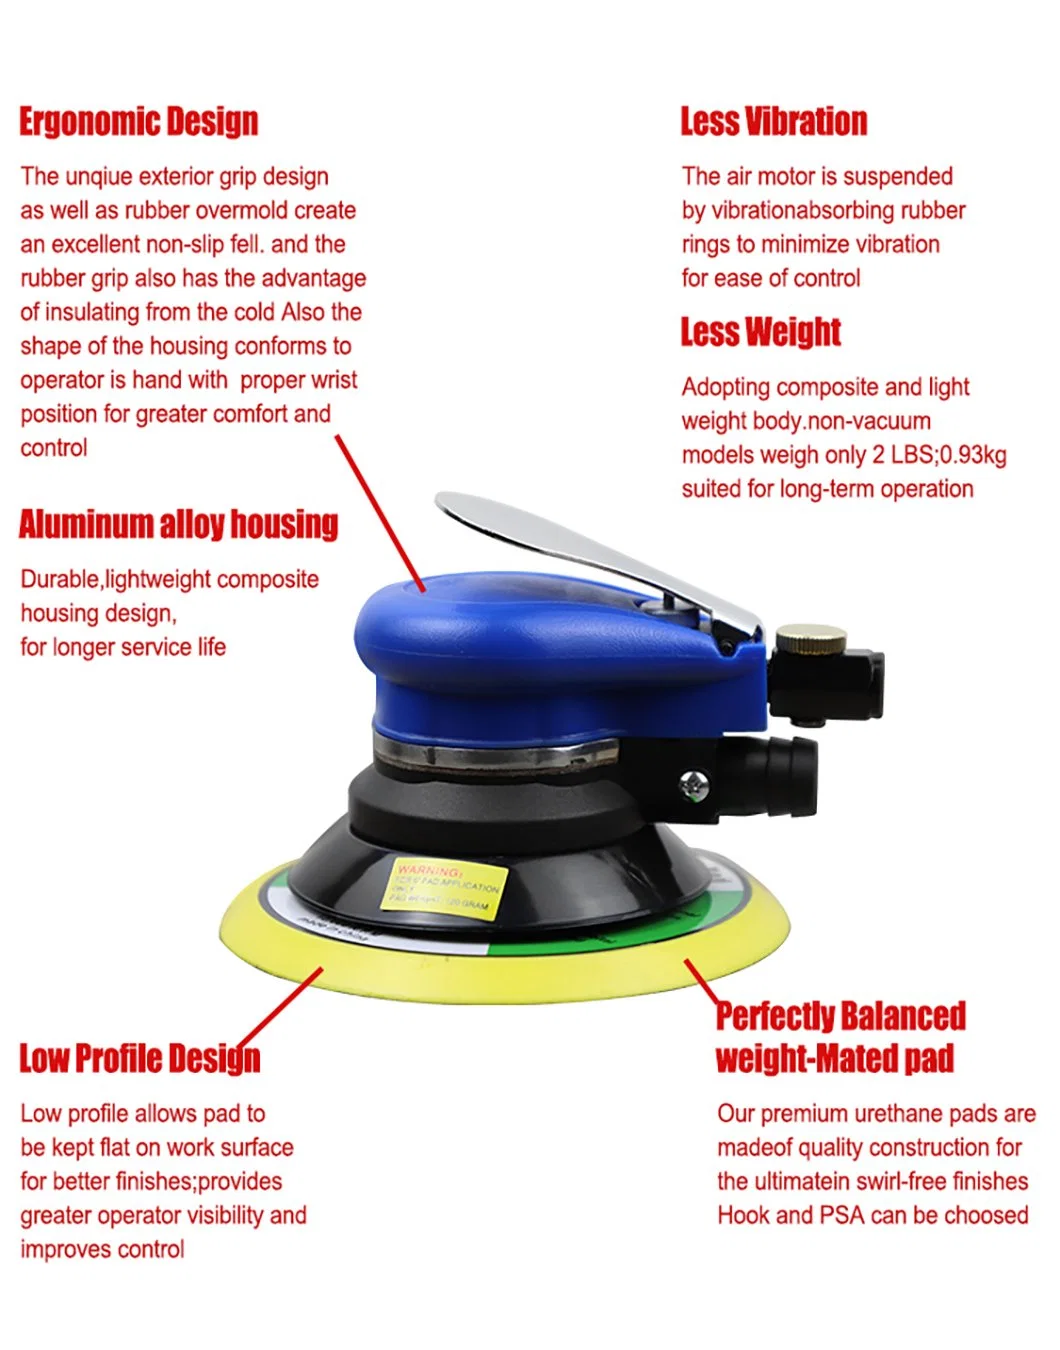 Obbl Mini Air Angle Sander Pneumatic Polishing Grinding Machine Sanding Pad Polisher Power Tools